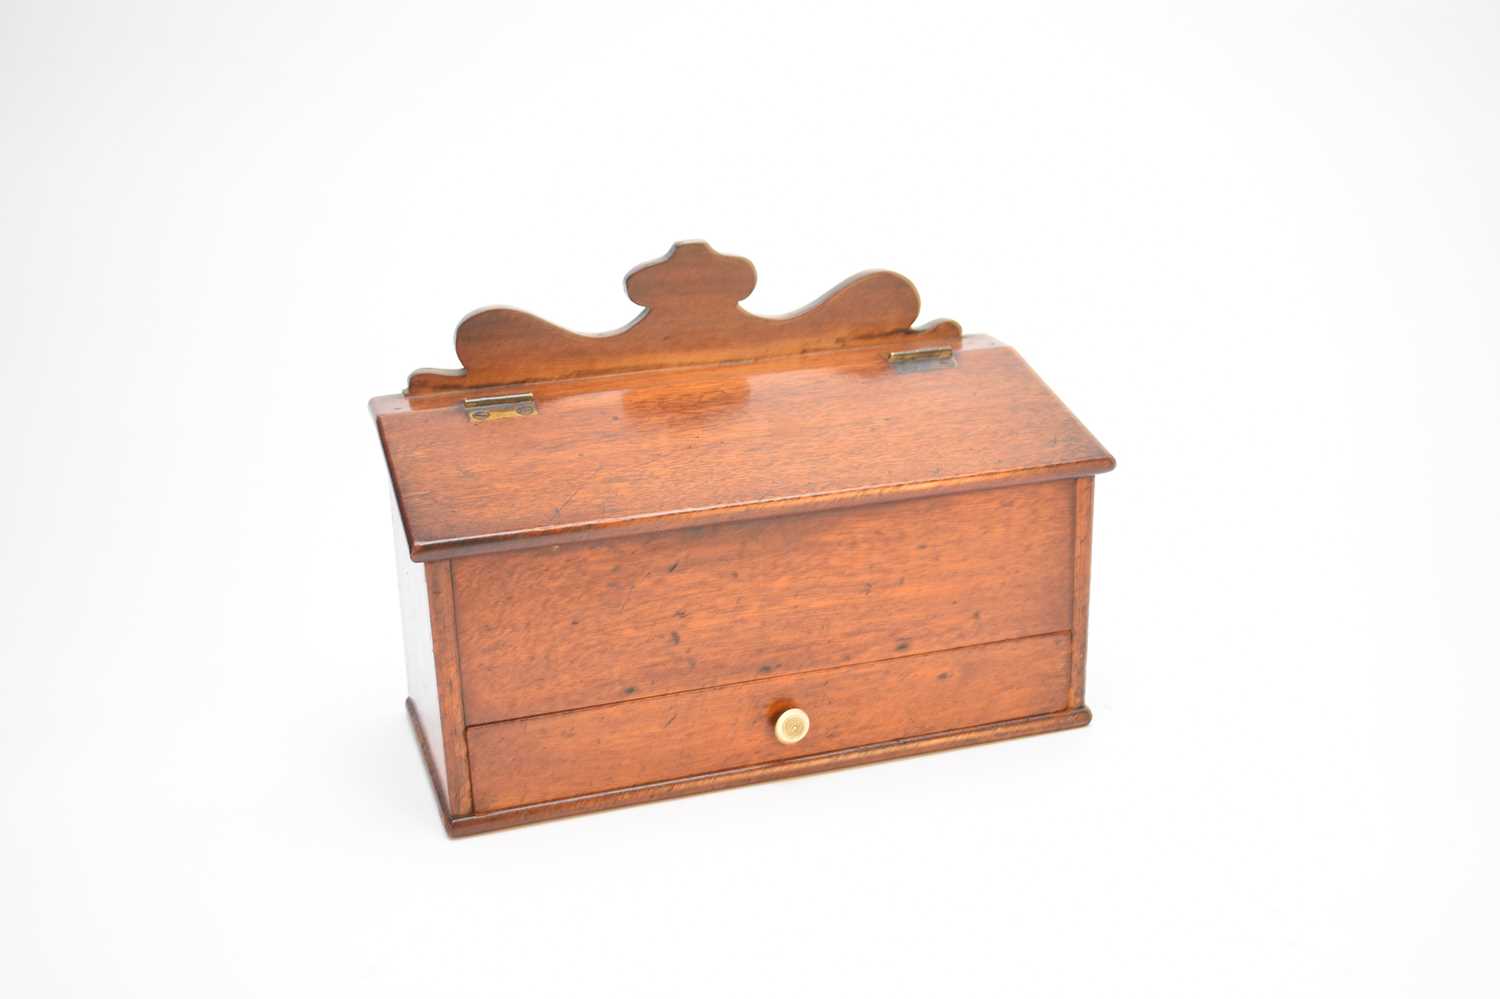 A 19th century oak candle box